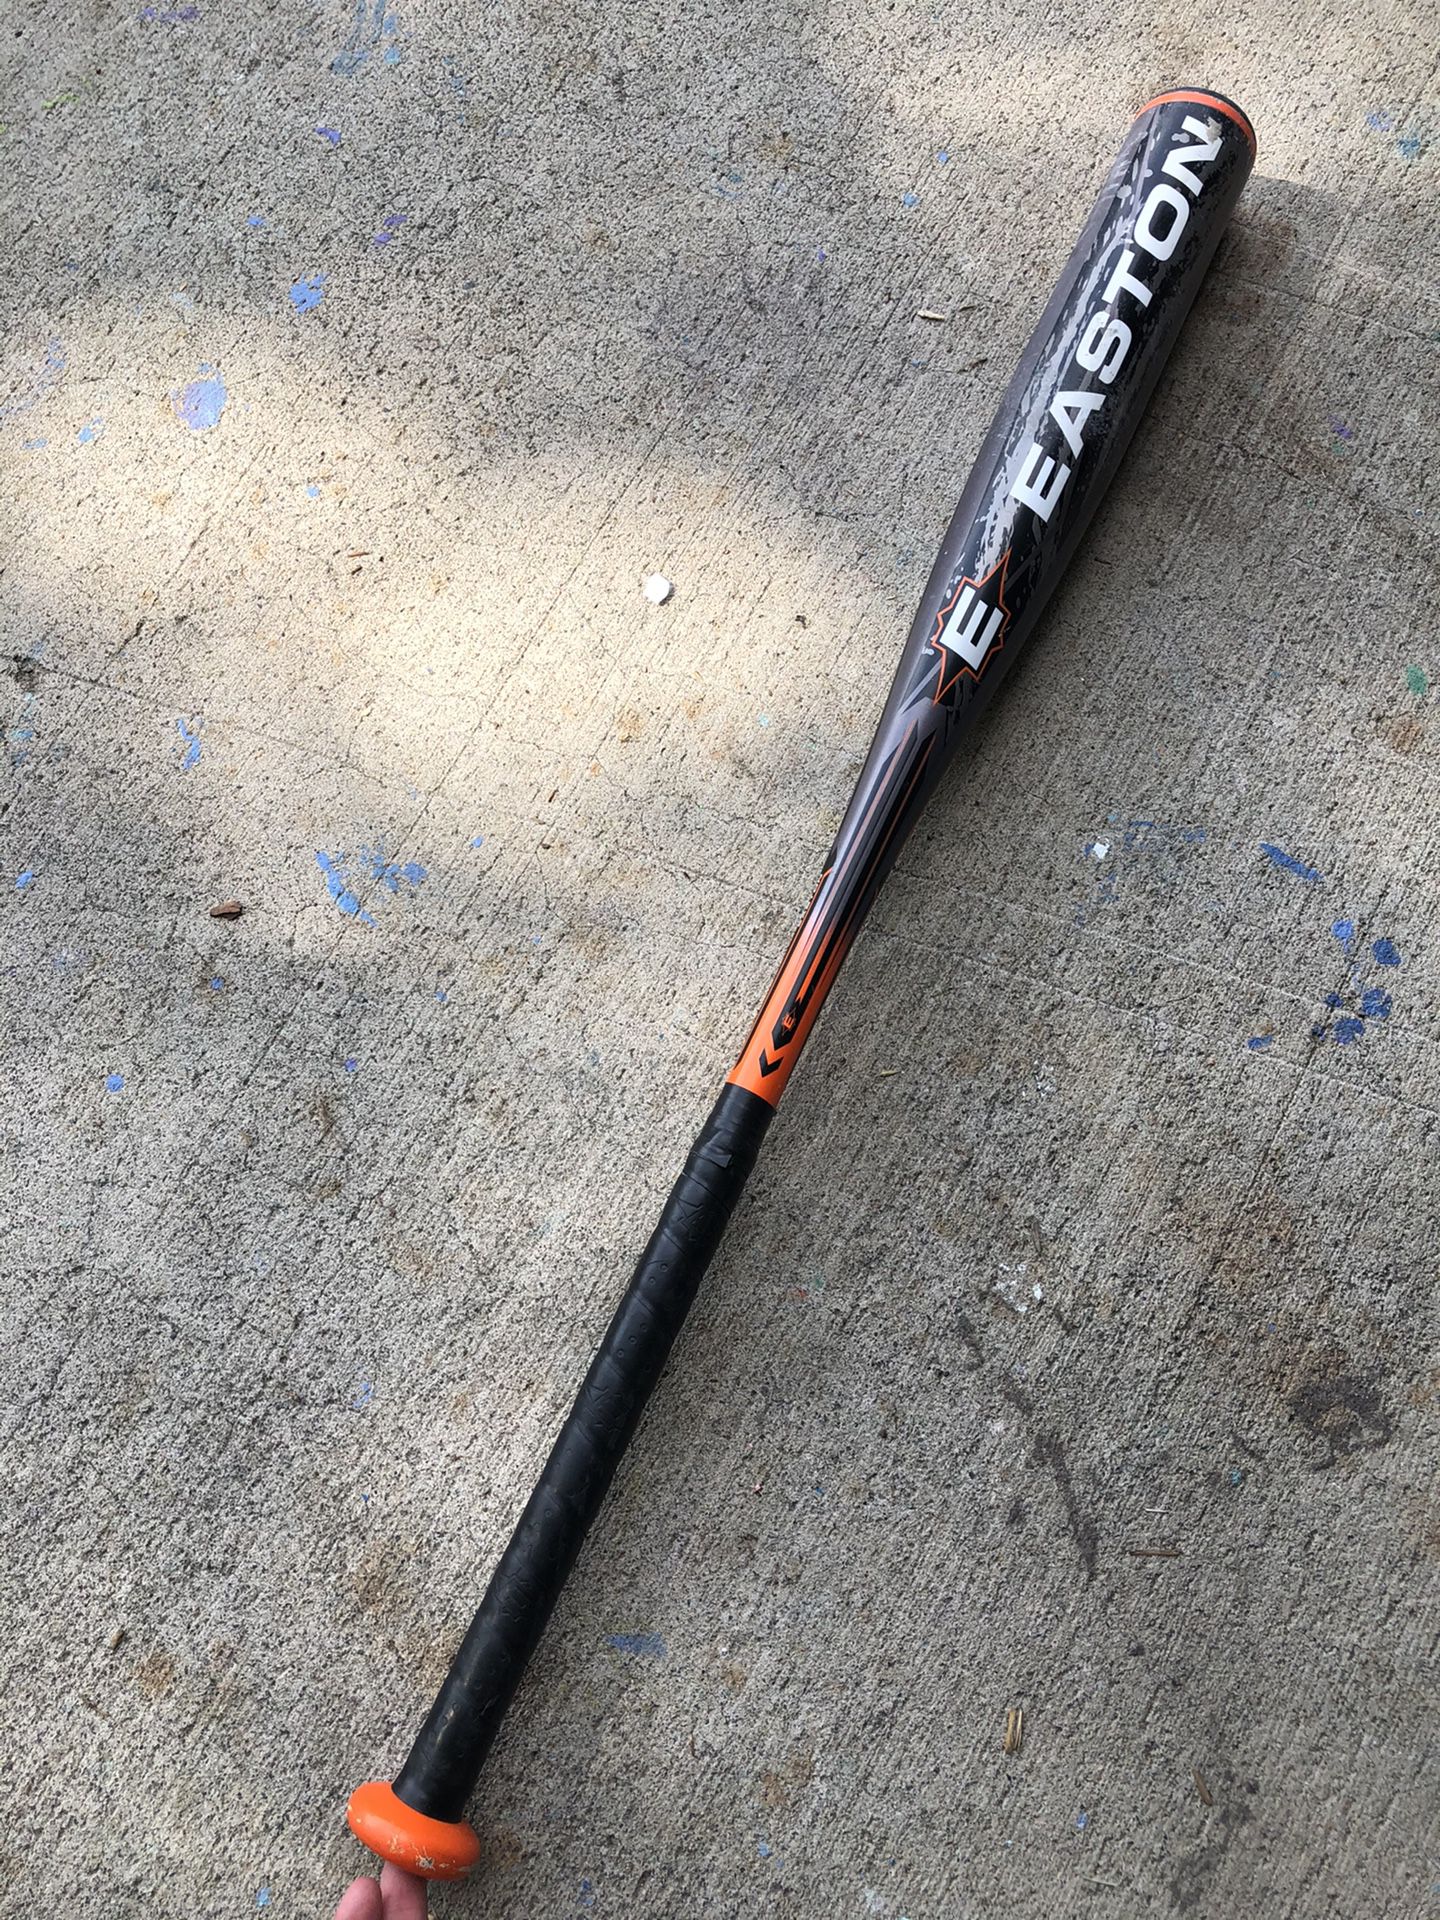 Easton orange baseball bat